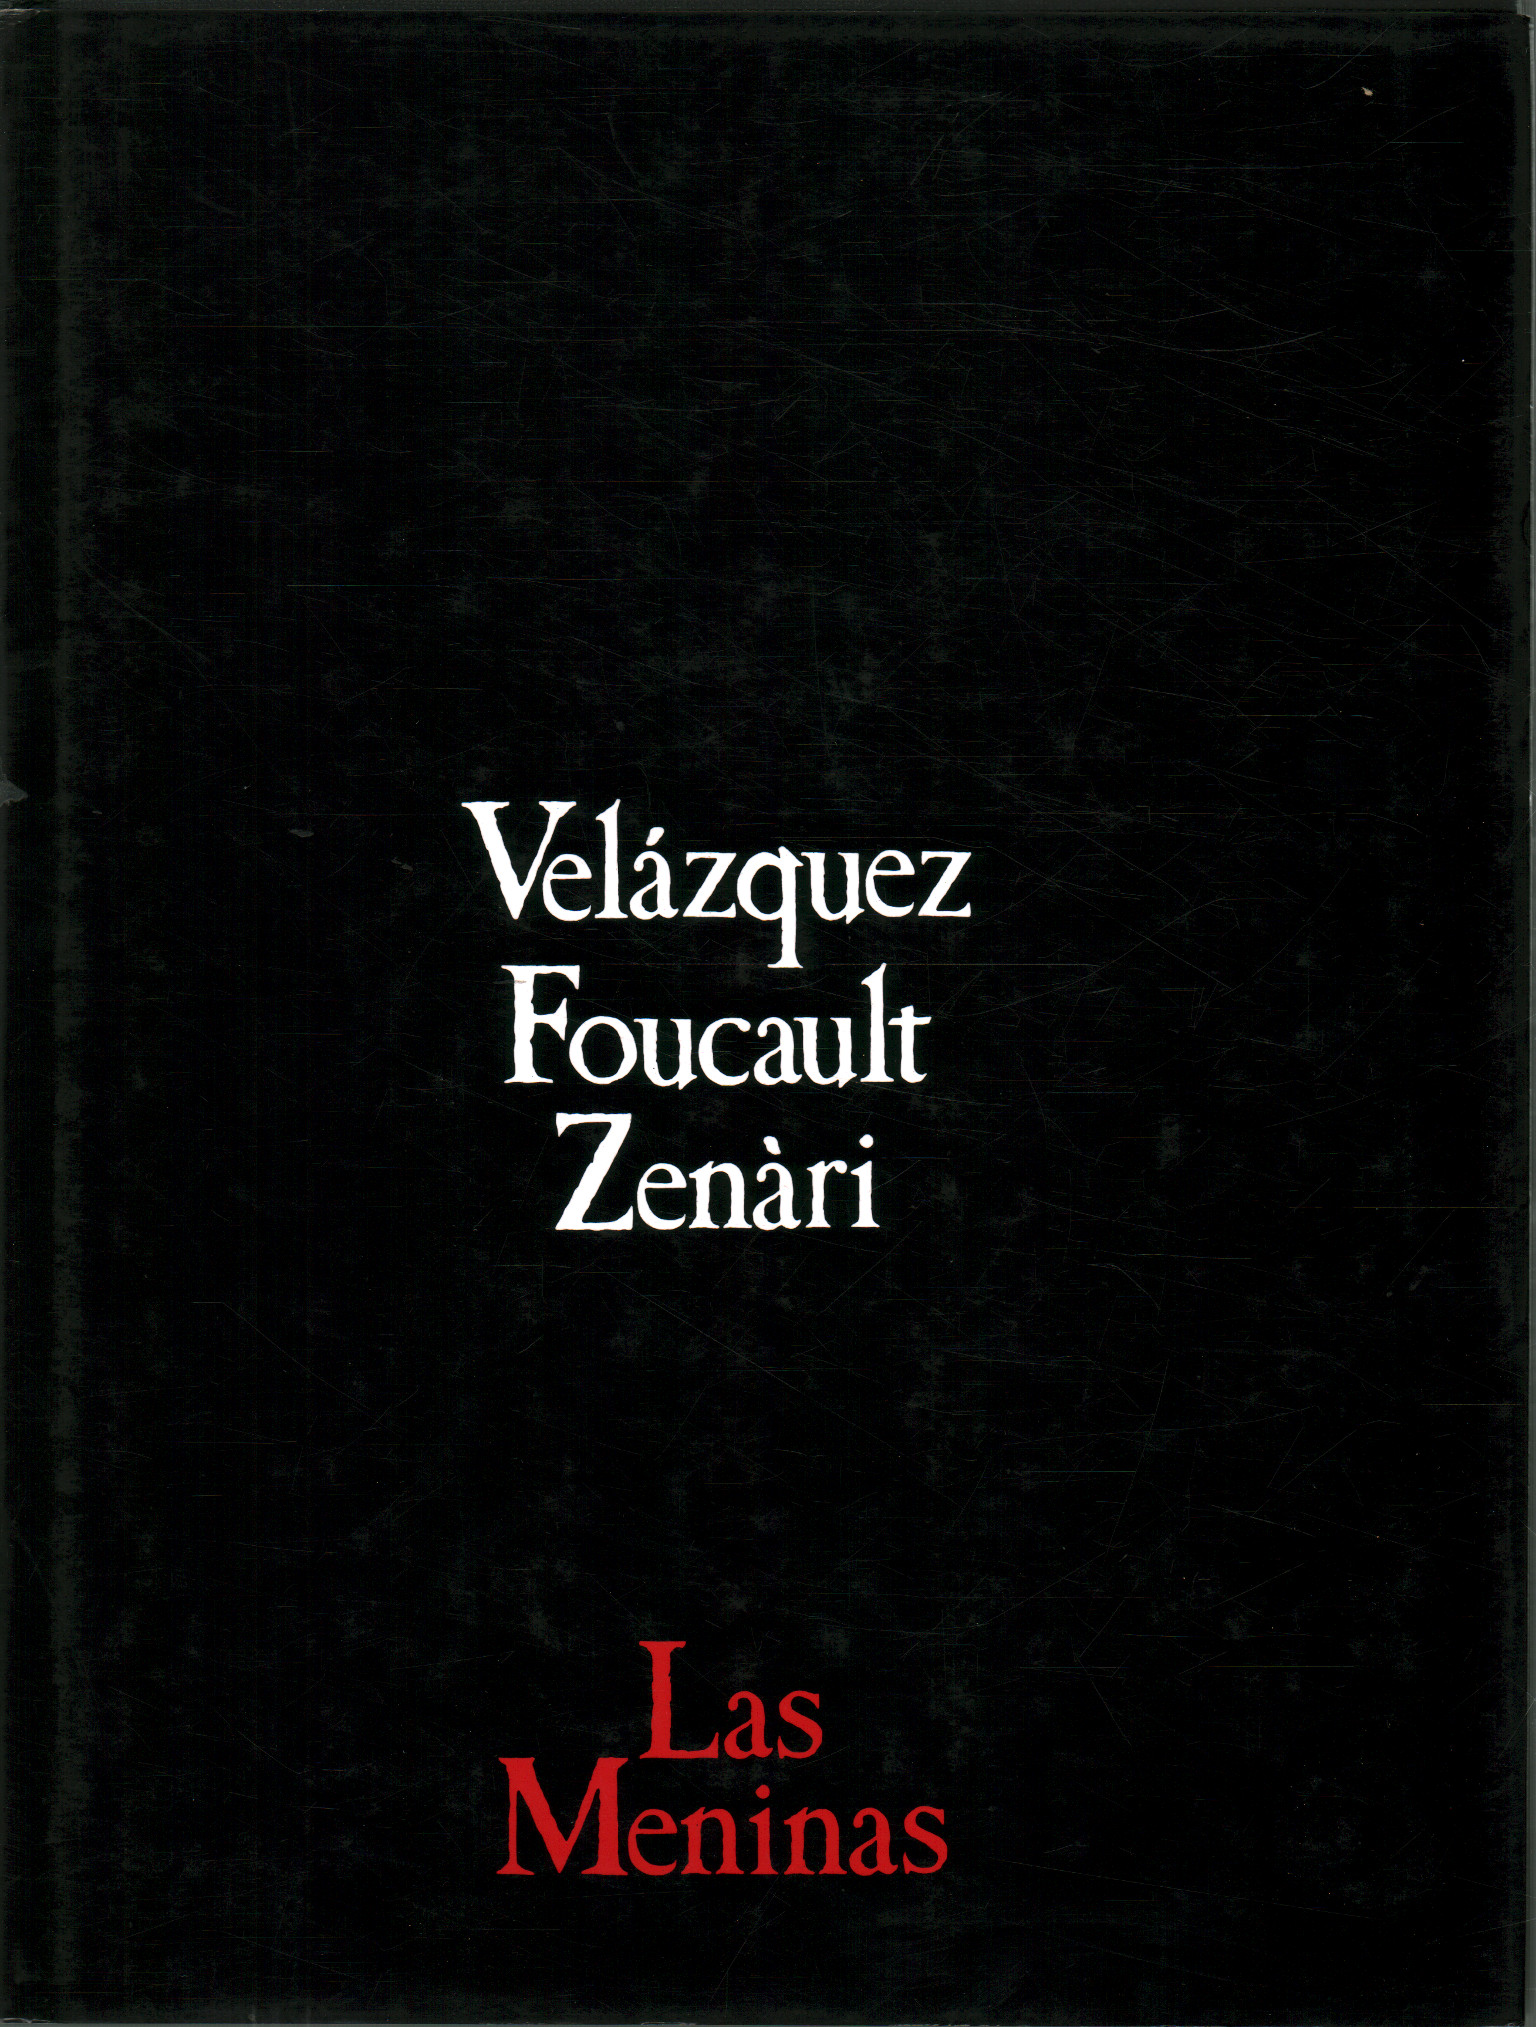 Velazquez Foucault Zenari. Las Meninas, AA.VV